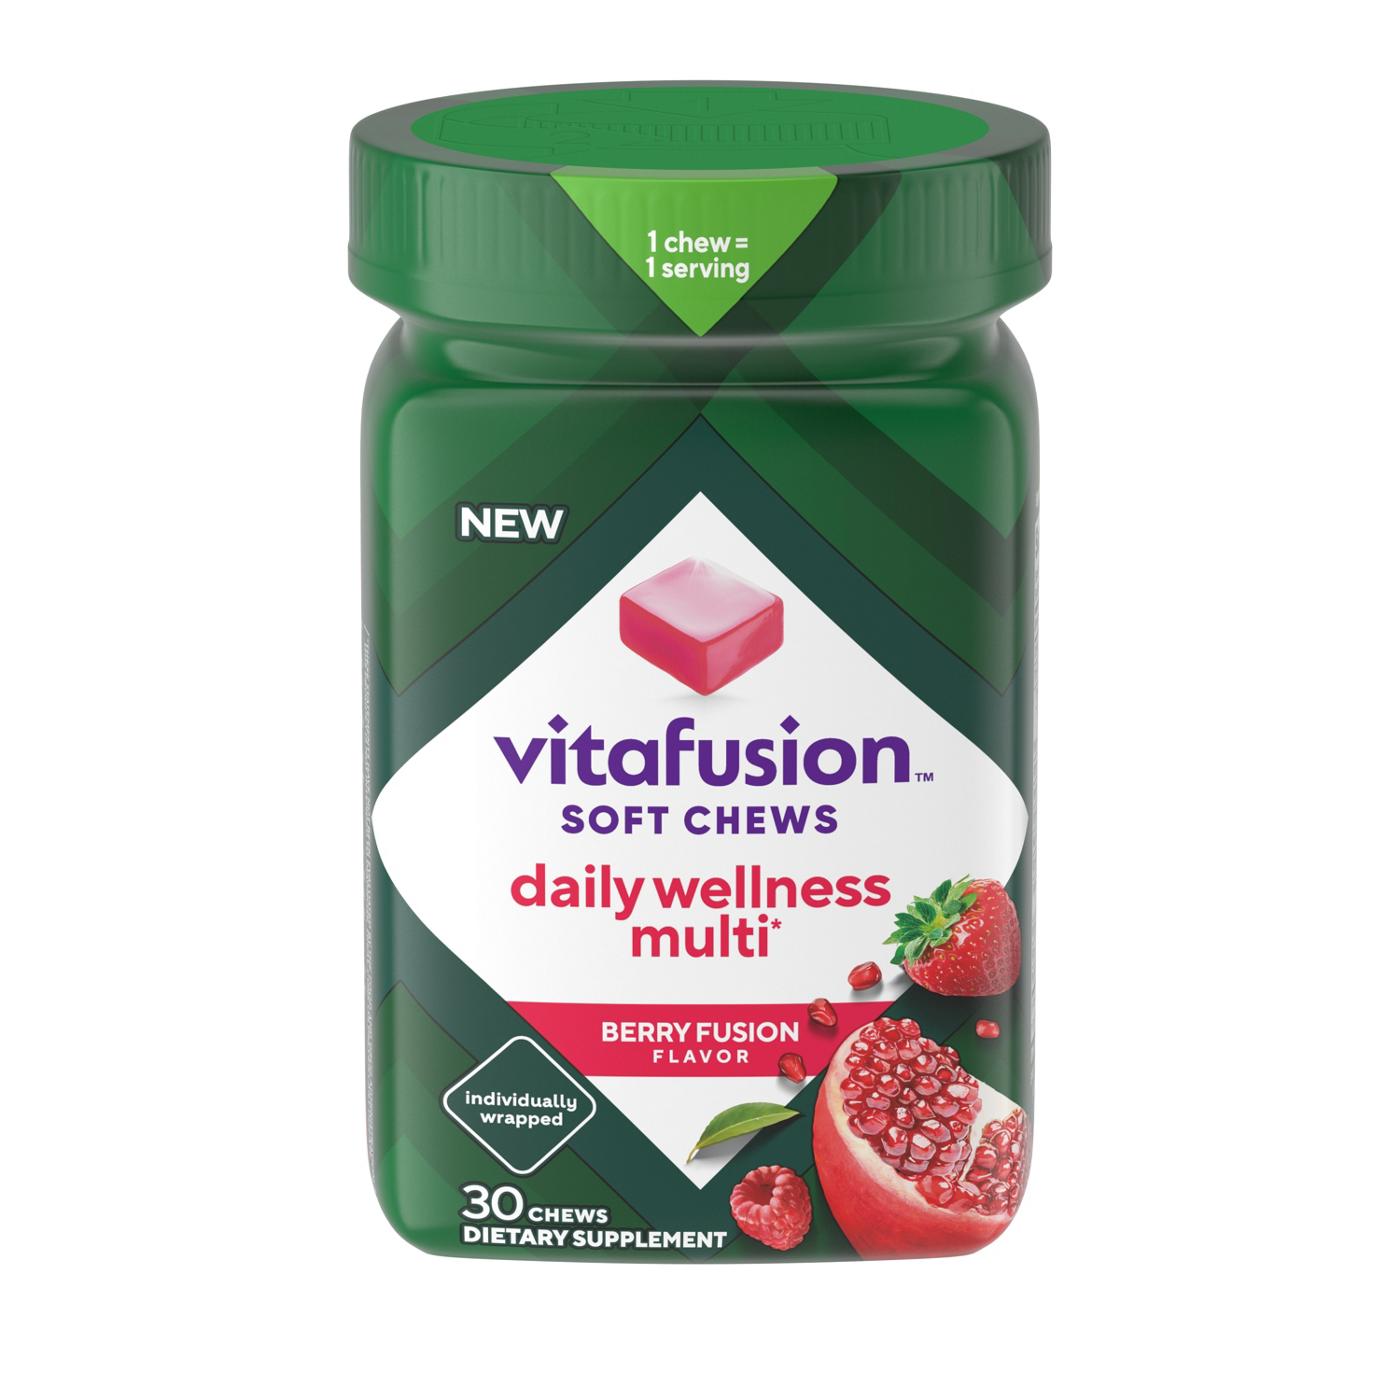 Vitafusion Soft Chews Daily Wellness Multi Chews - Berry Fusion; image 1 of 3